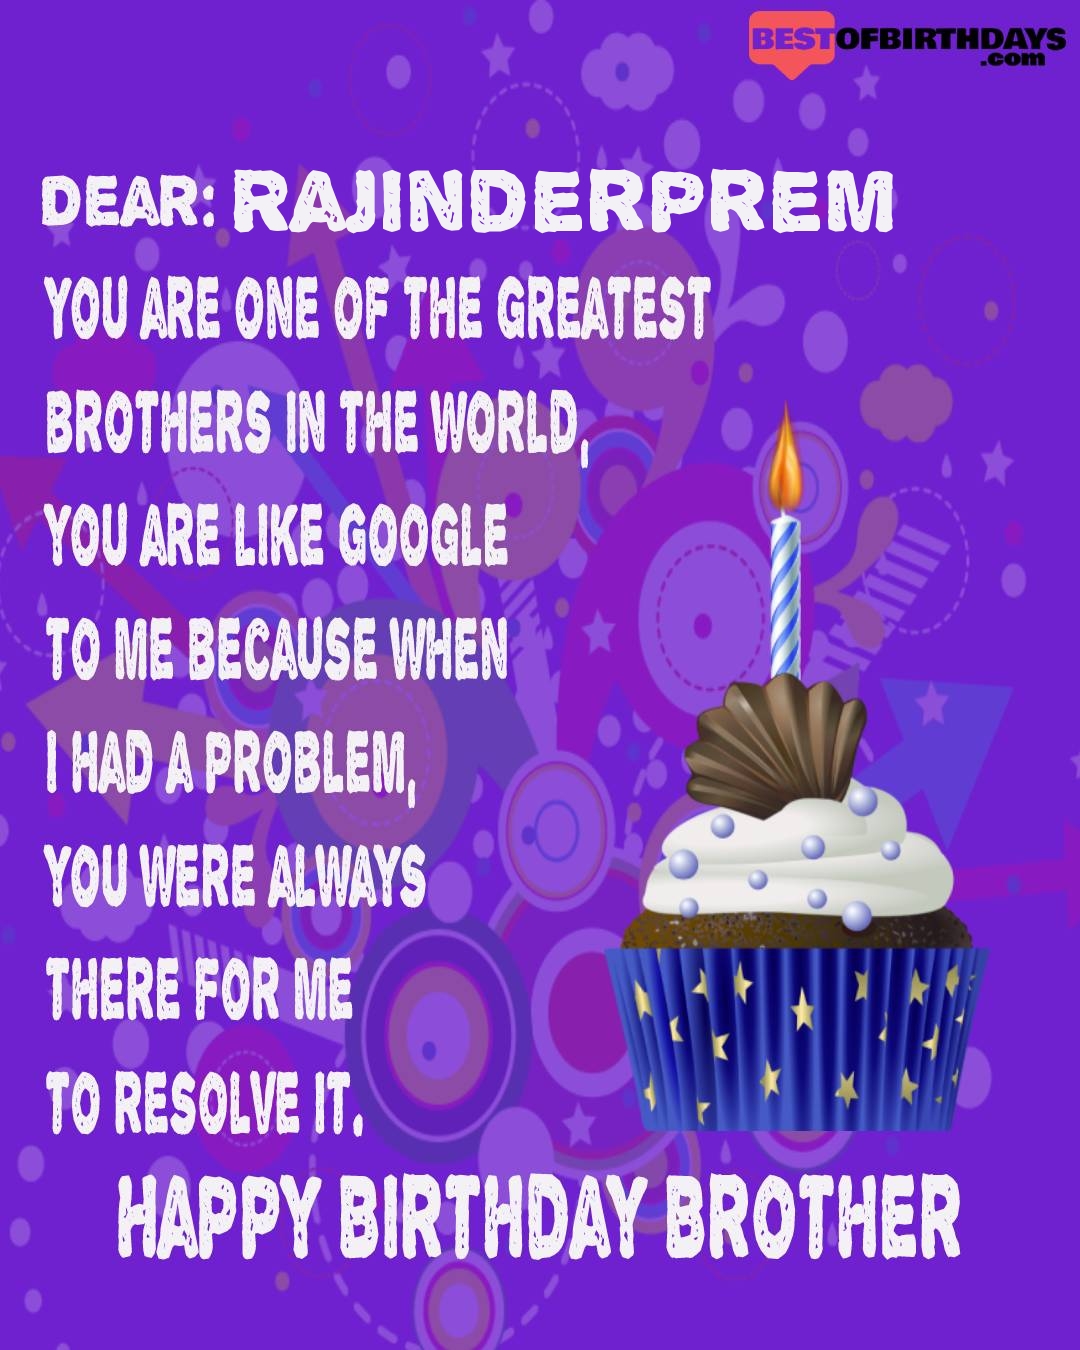 Happy birthday rajinderprem bhai brother bro